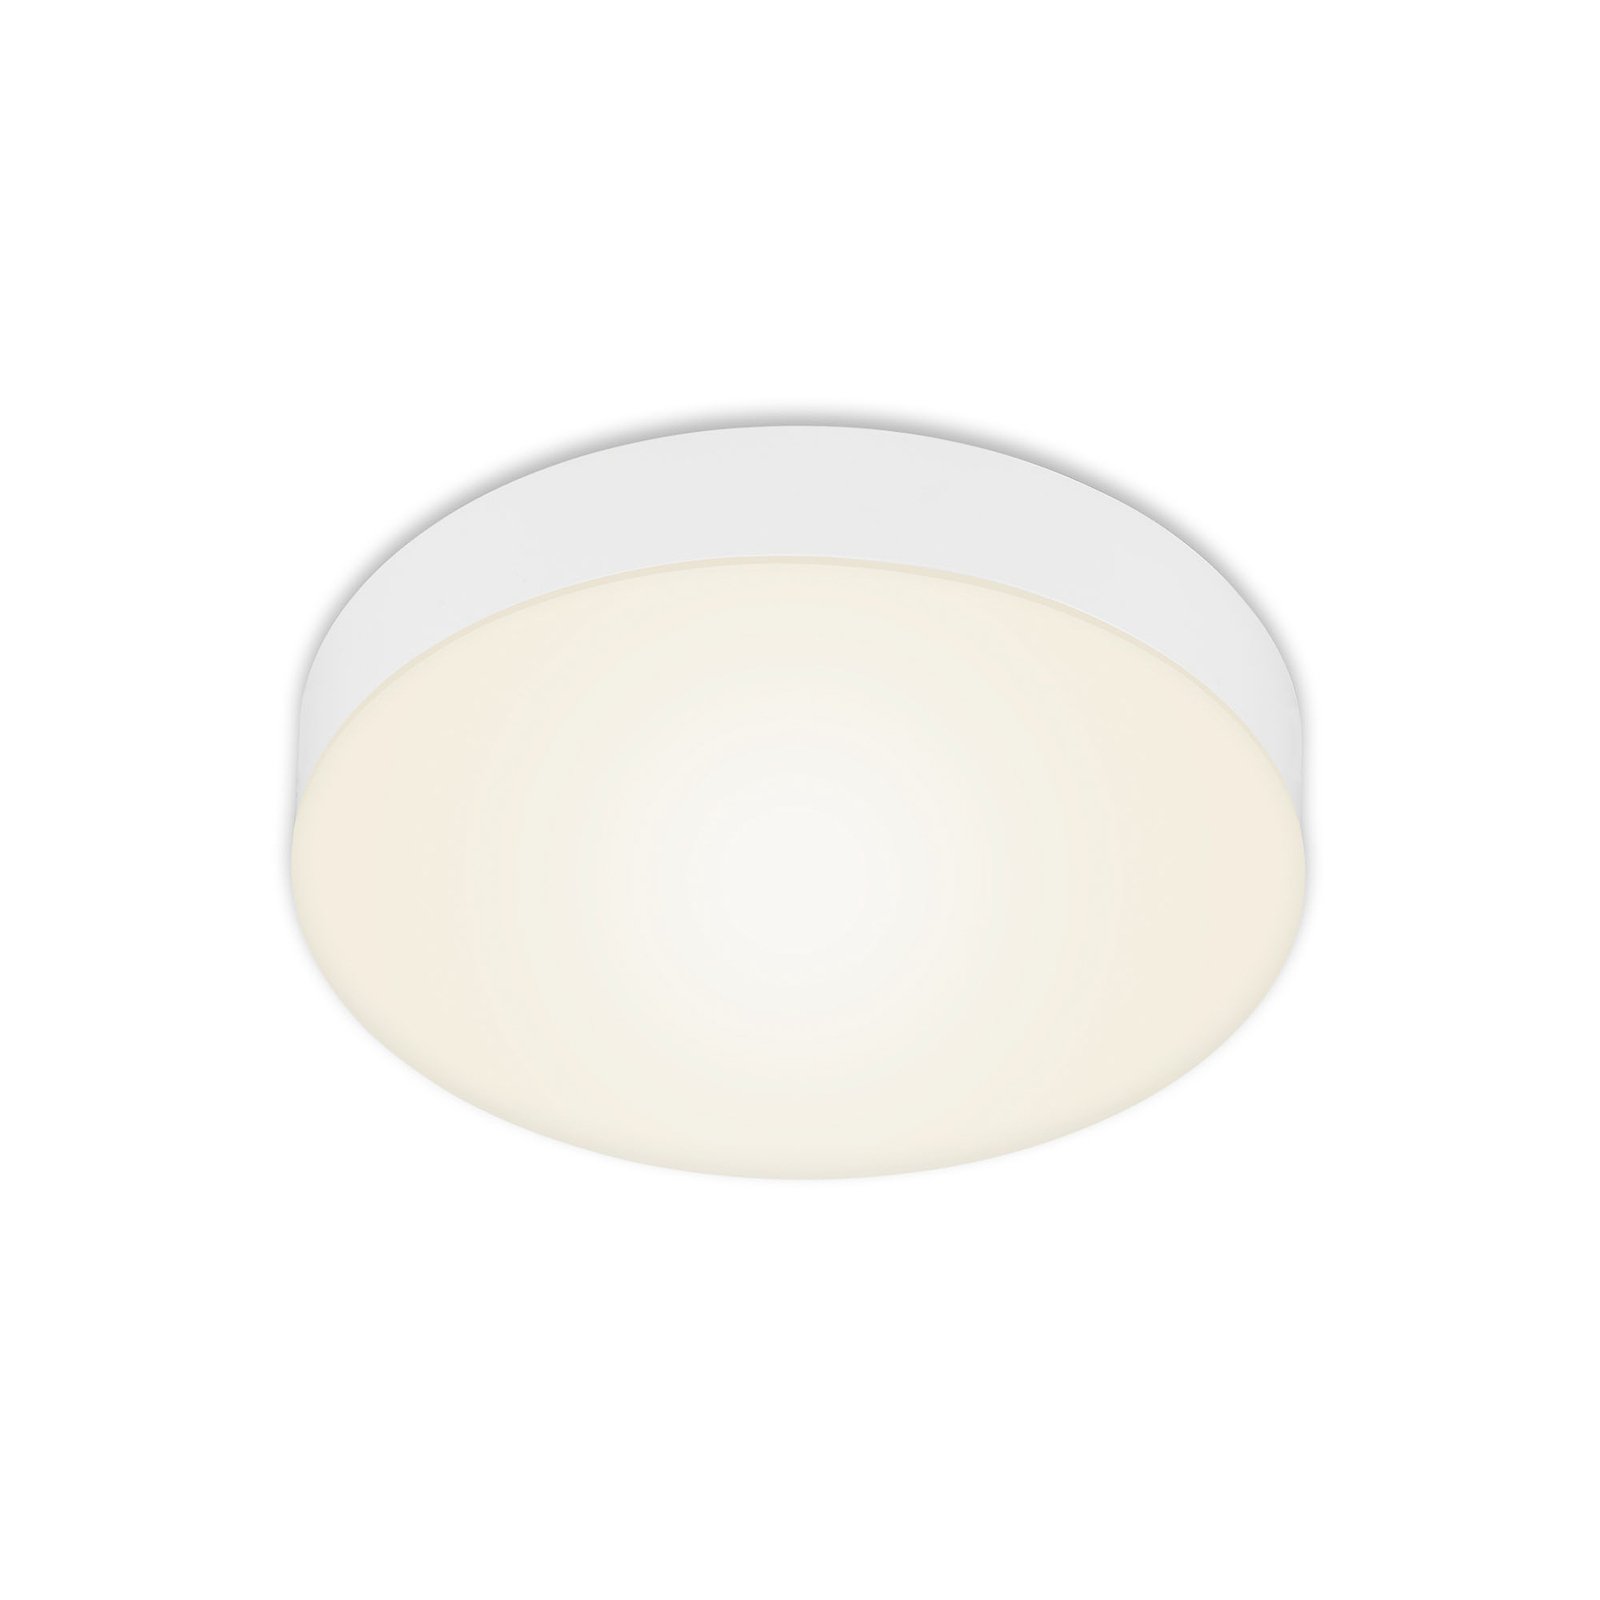 Lampa sufitowa LED Flame, Ø 21,2 cm, biała